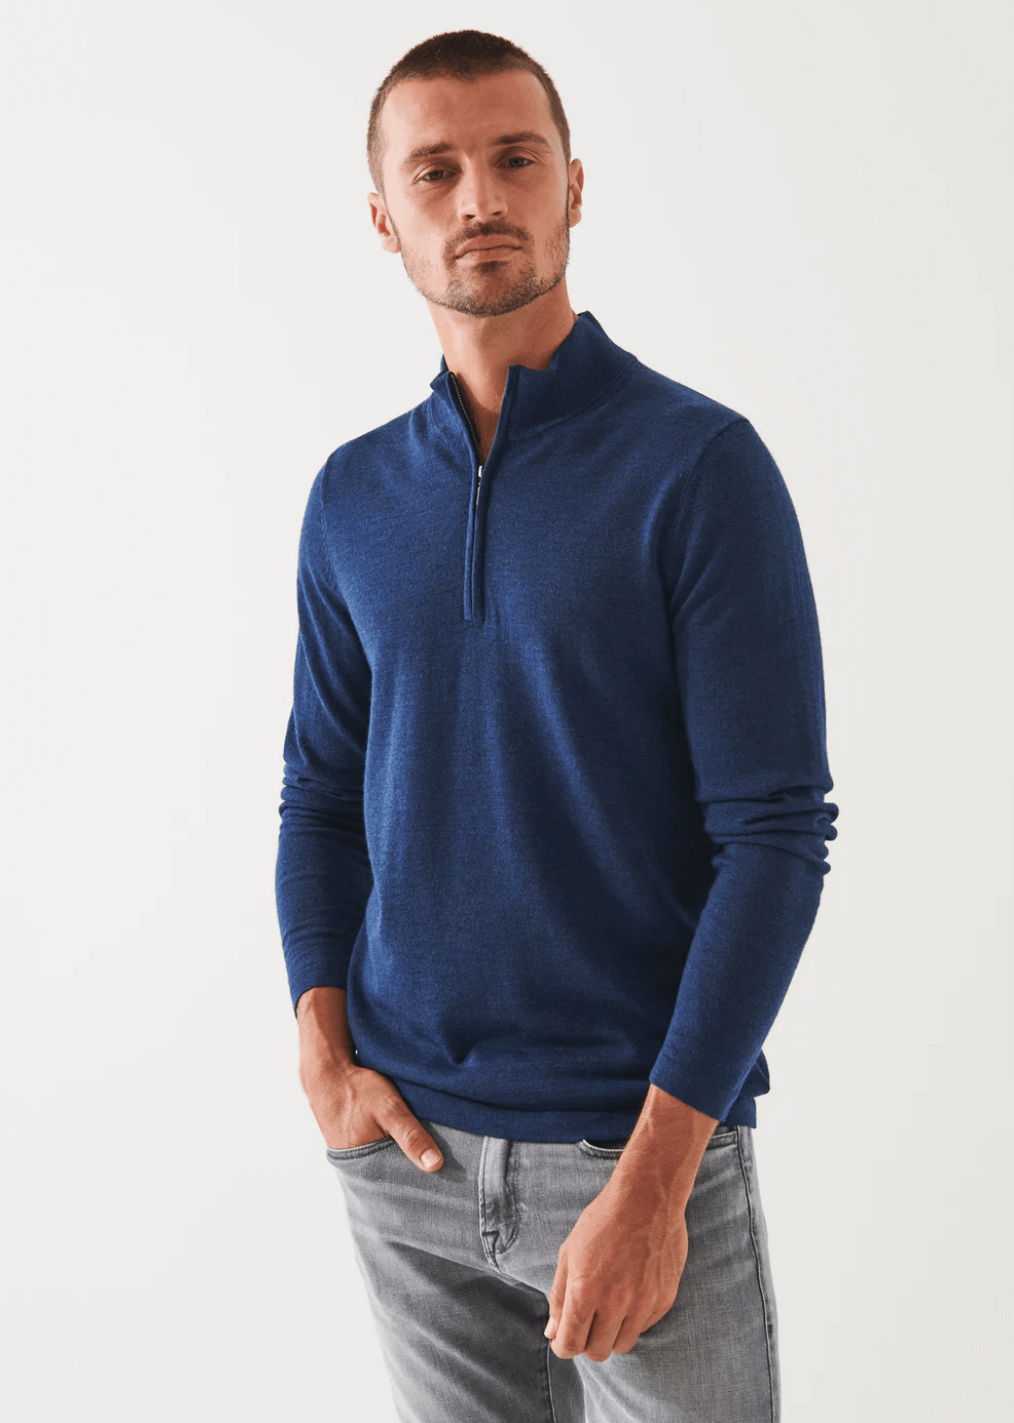 Orvis Fishing Sweater Mens Medium Blue Pima Cotton Mock Neck 1/4 Zip  Pullover